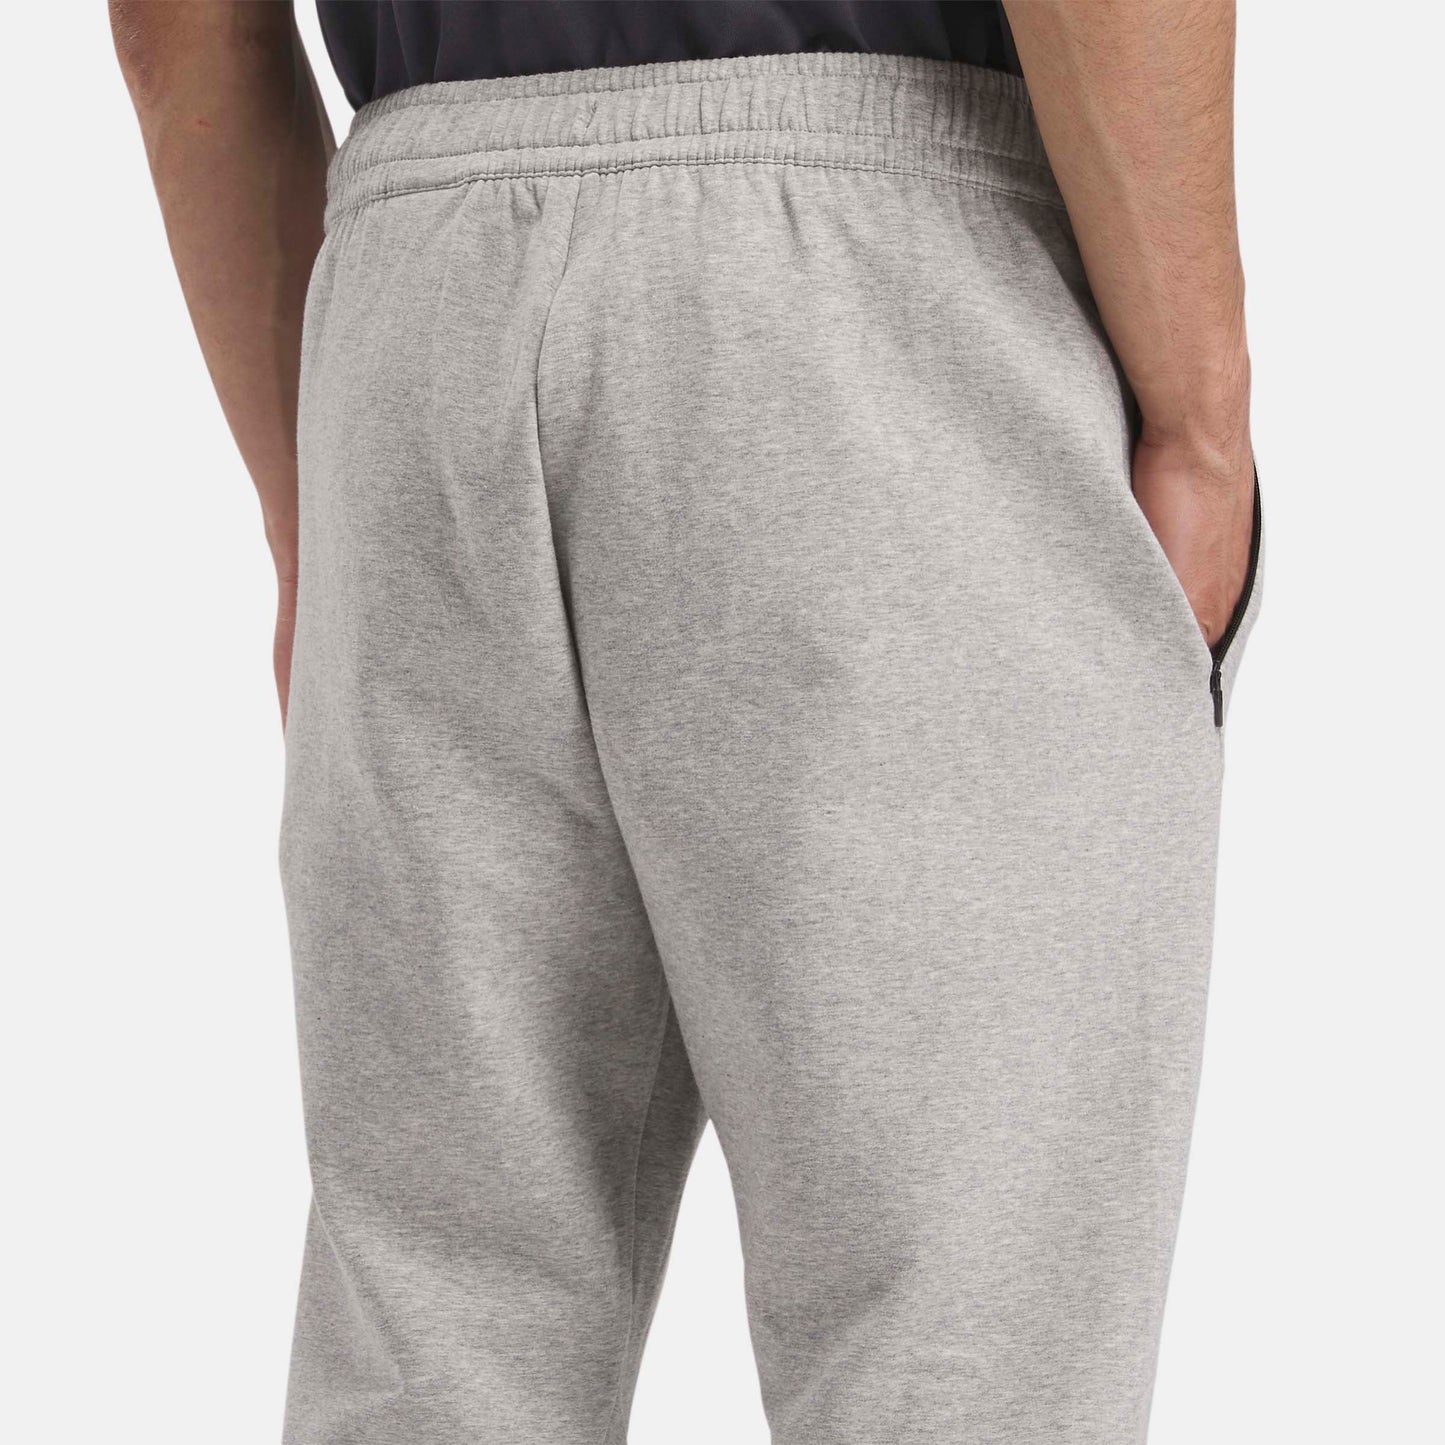 Reebok Men's Crossfit Speedwick Pants, Medium Grey Heather, X